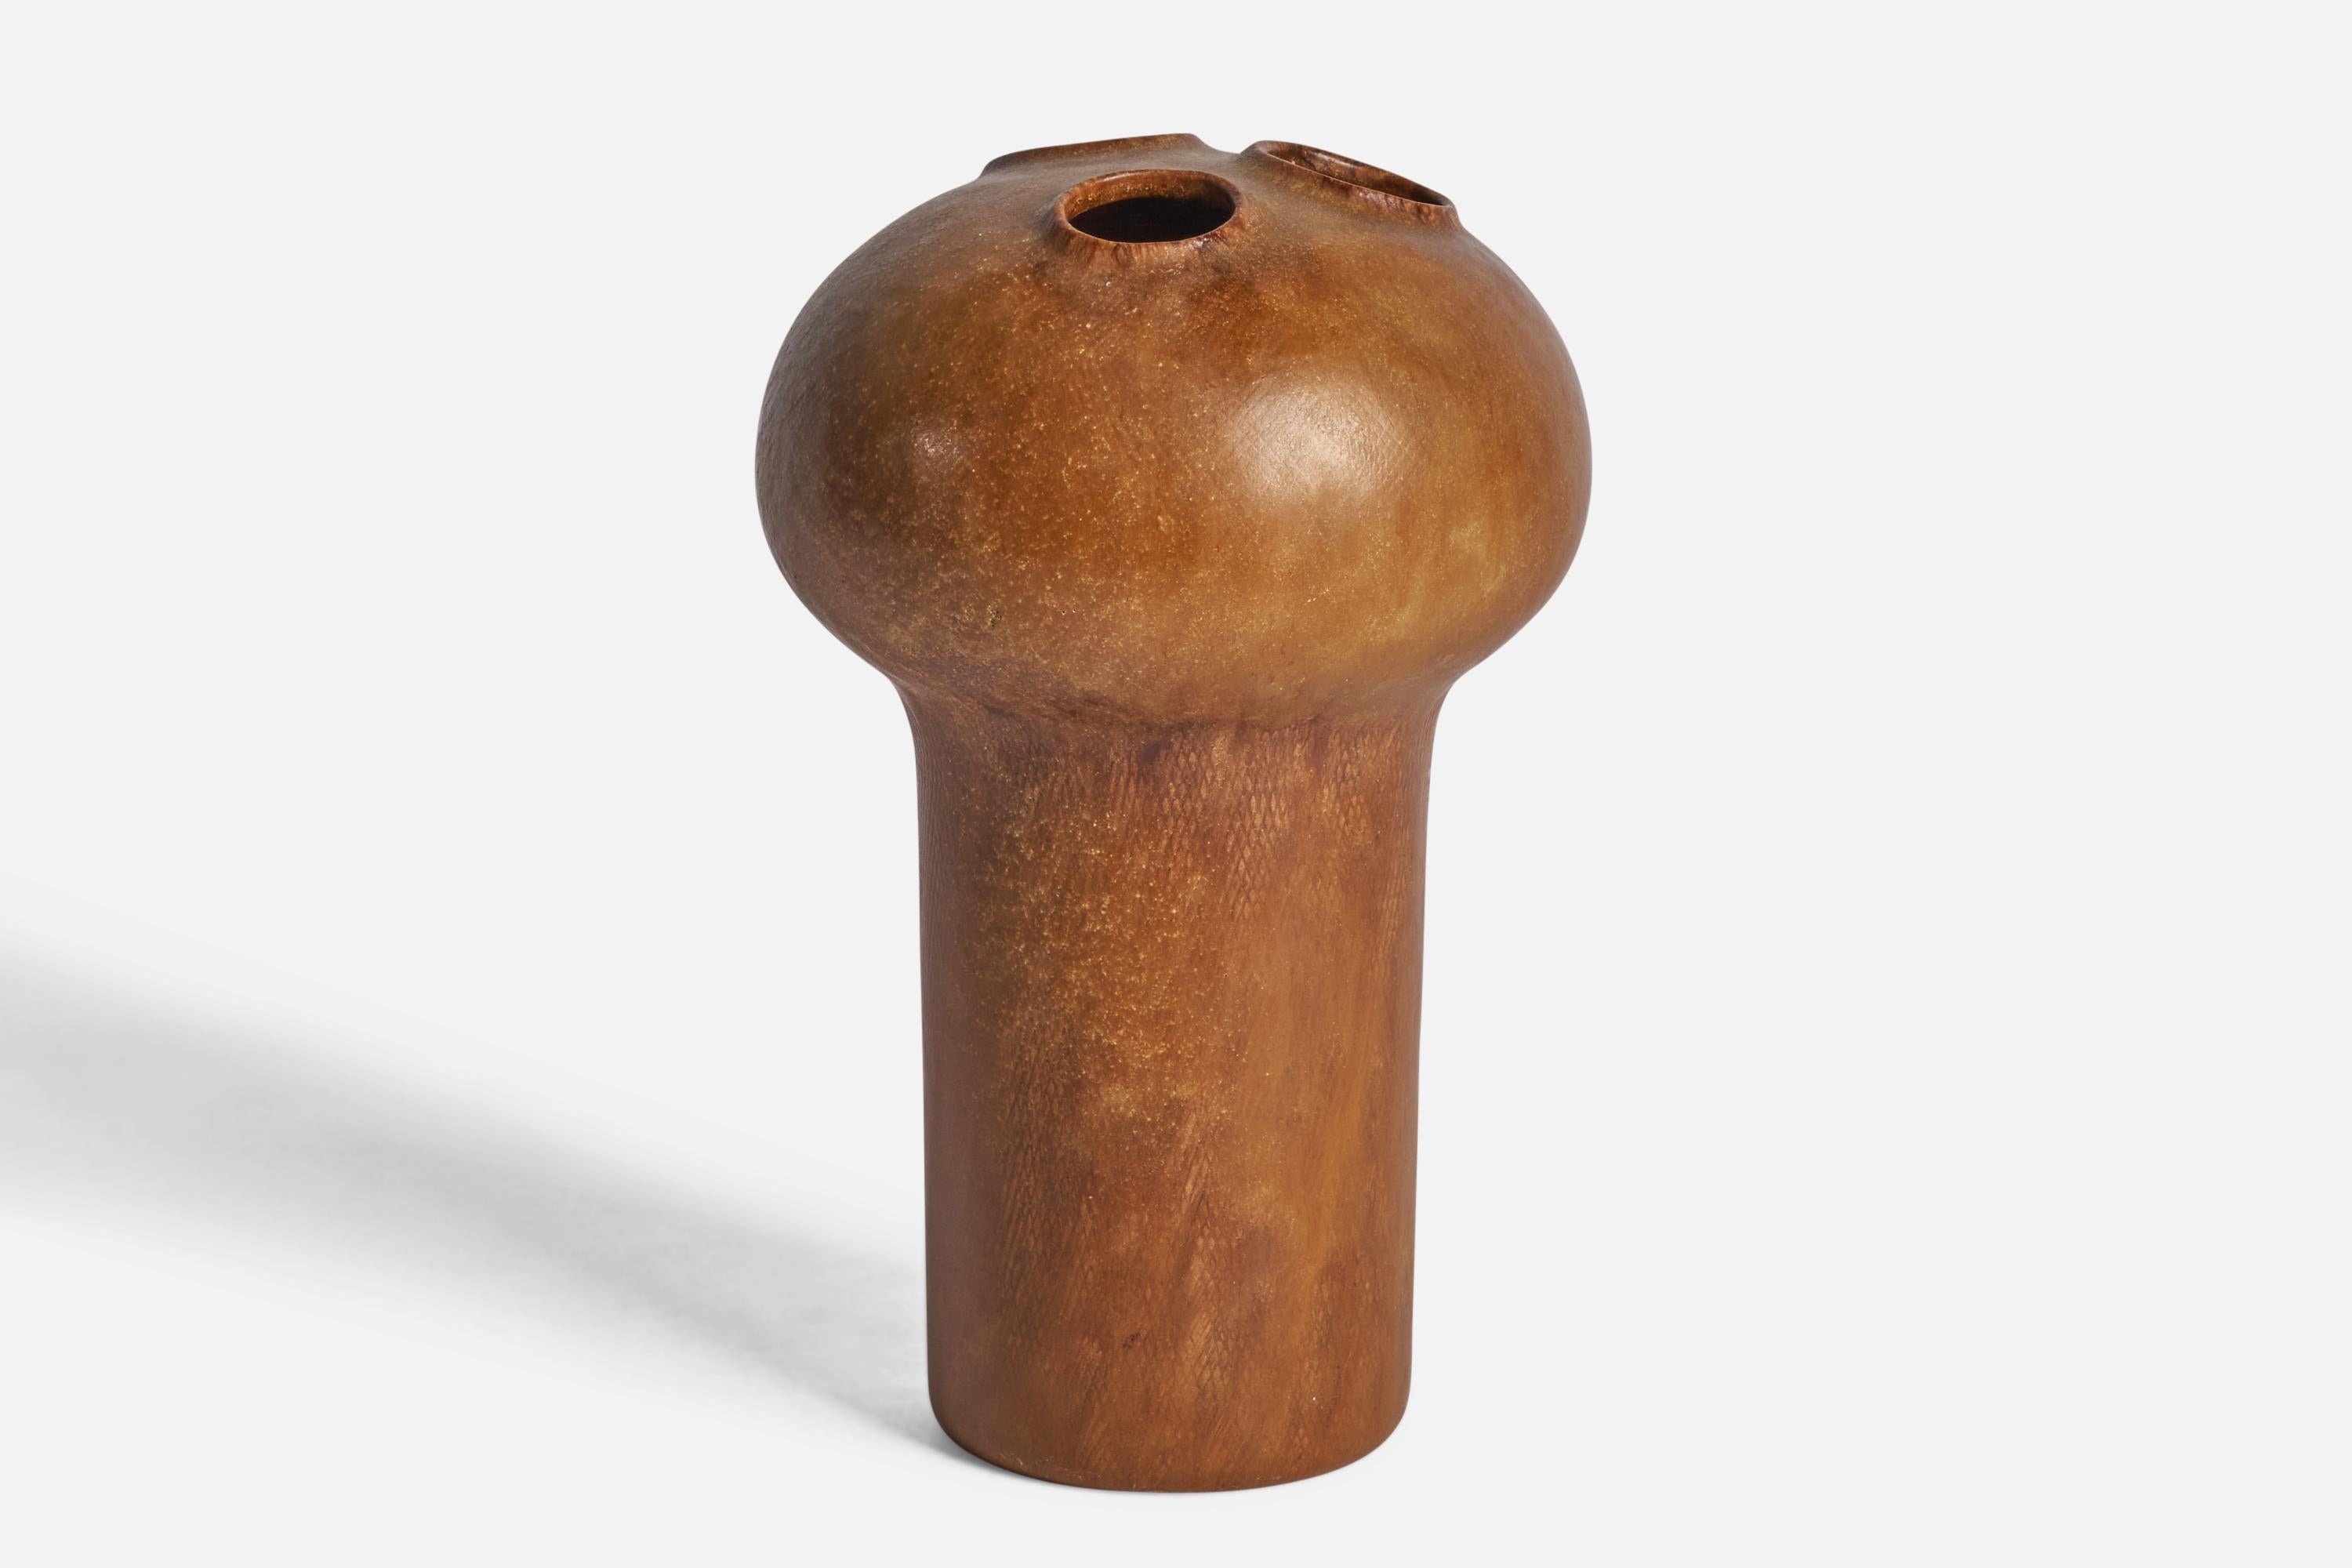 A brown-glazed stoneware vase designed by Kirsten Günther and produced by Knabstrup, Denmark, 1972.

“KNABSTRUP 3617818 — Made in Denmark” on bottom